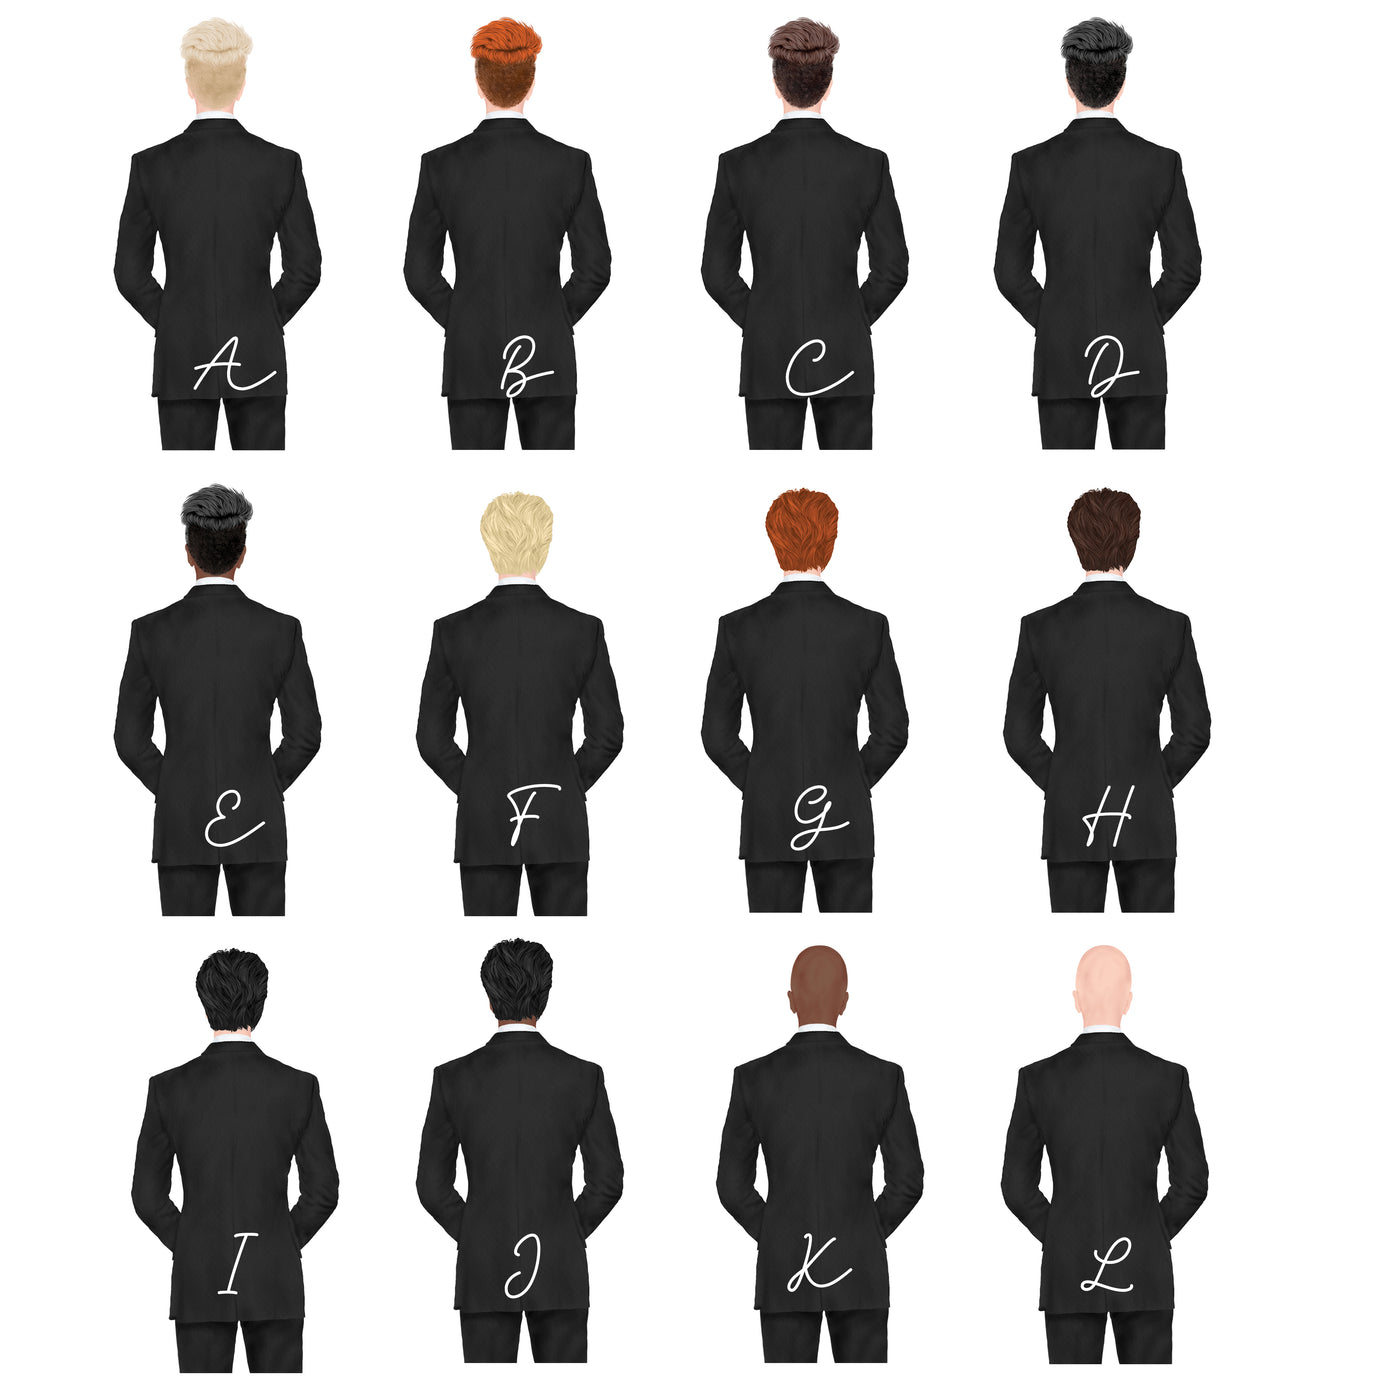 UV DTF - Groom Black suit - Decal 3"